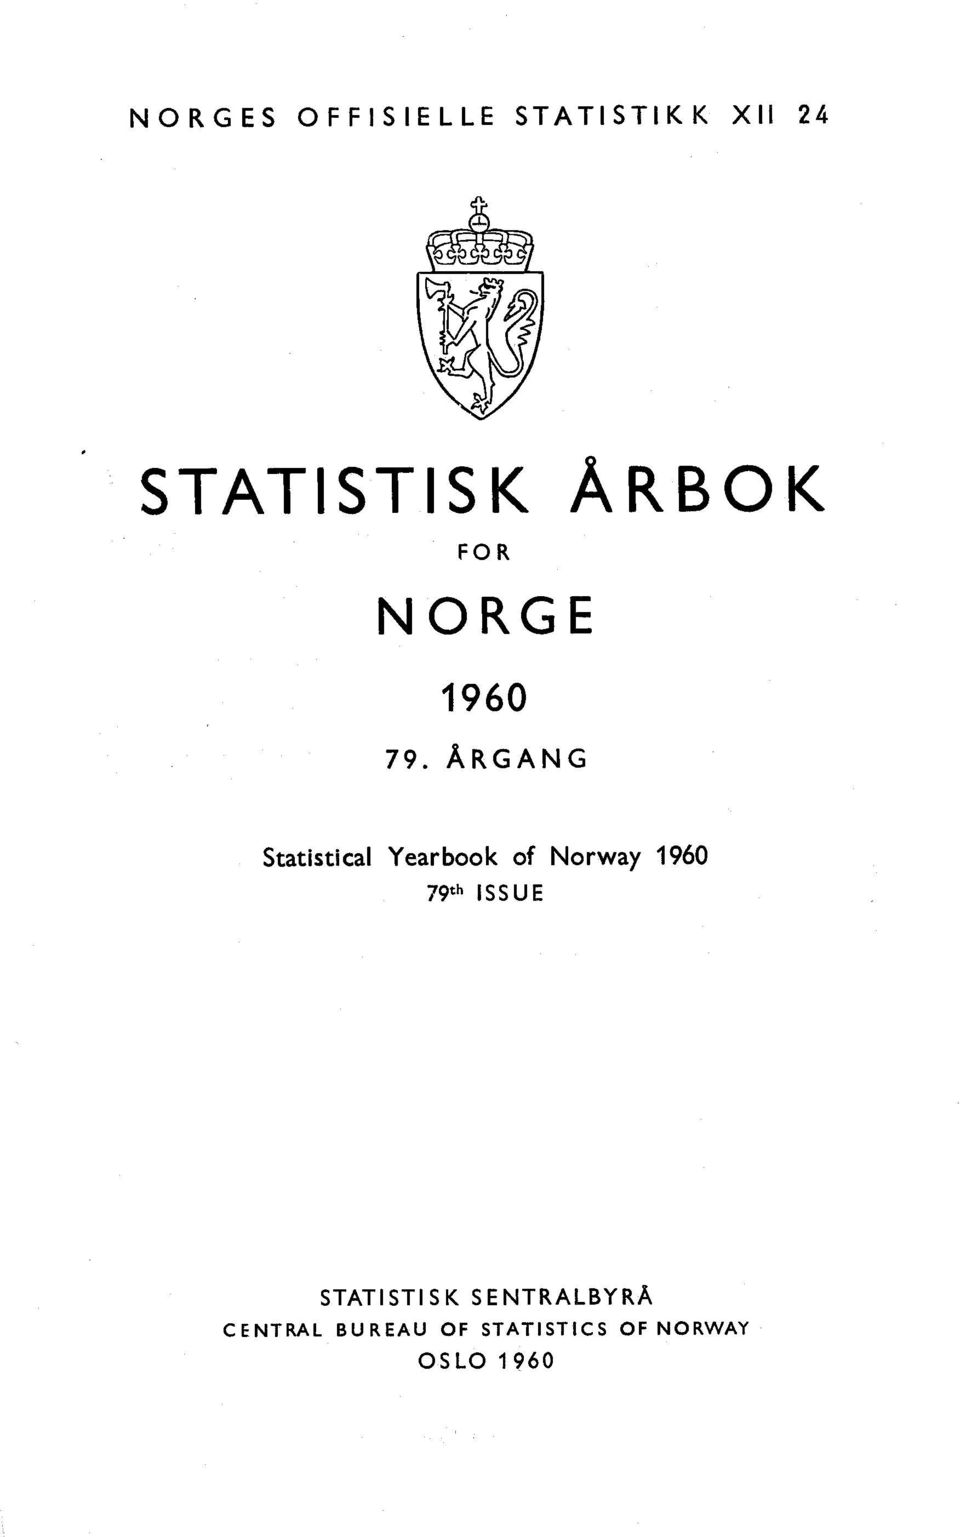 ÅRGANG Statistical Yearbook of Norway 1960 79th